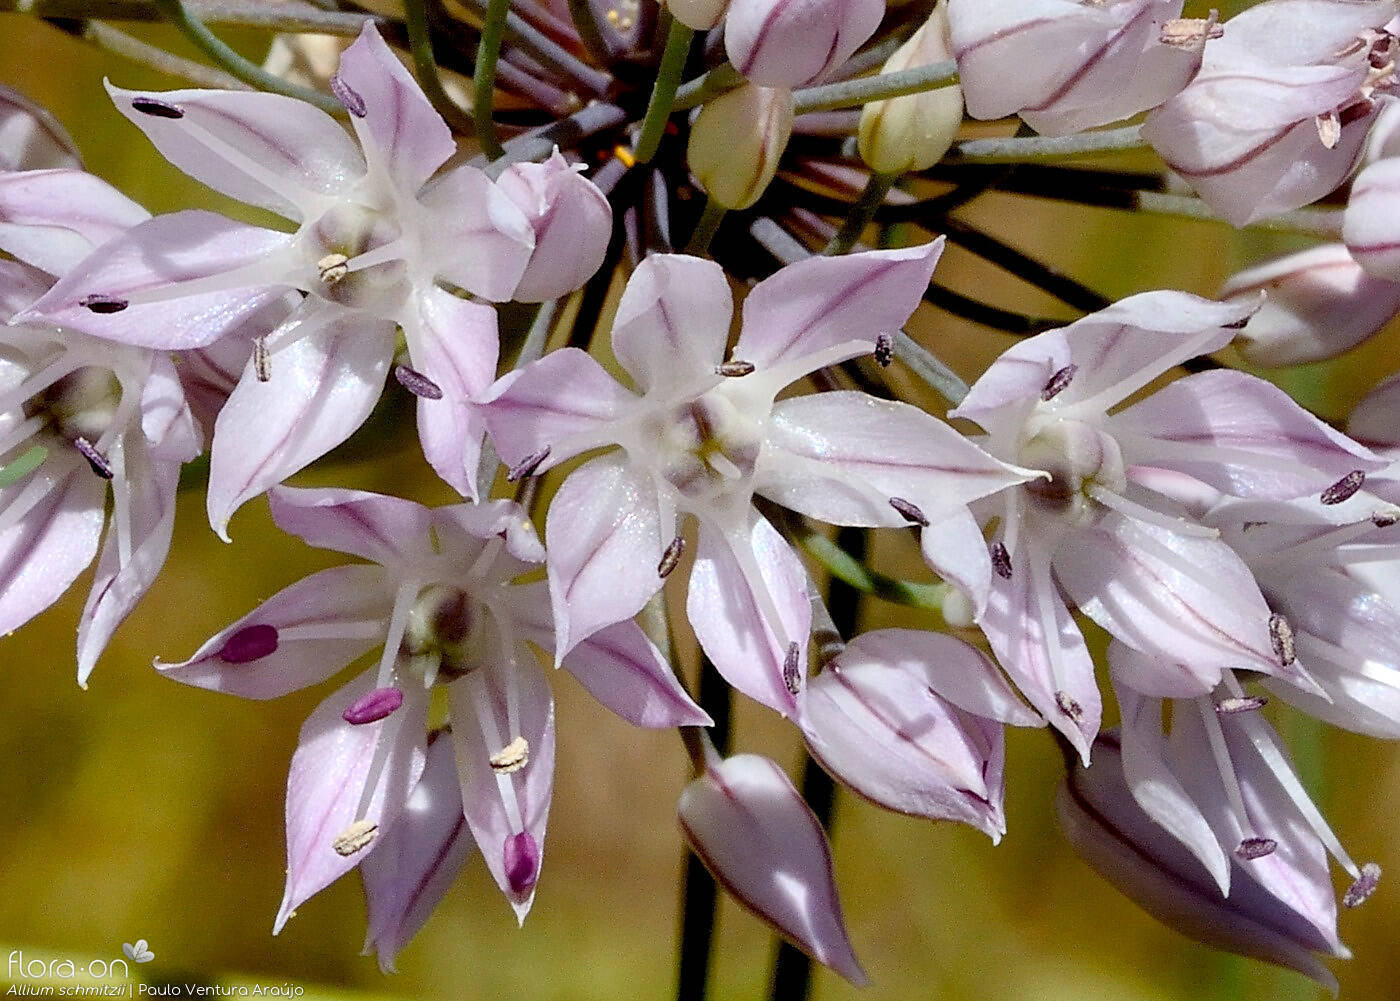 Allium schmitzii - Flor (close-up) | Paulo Ventura Araújo; CC BY-NC 4.0